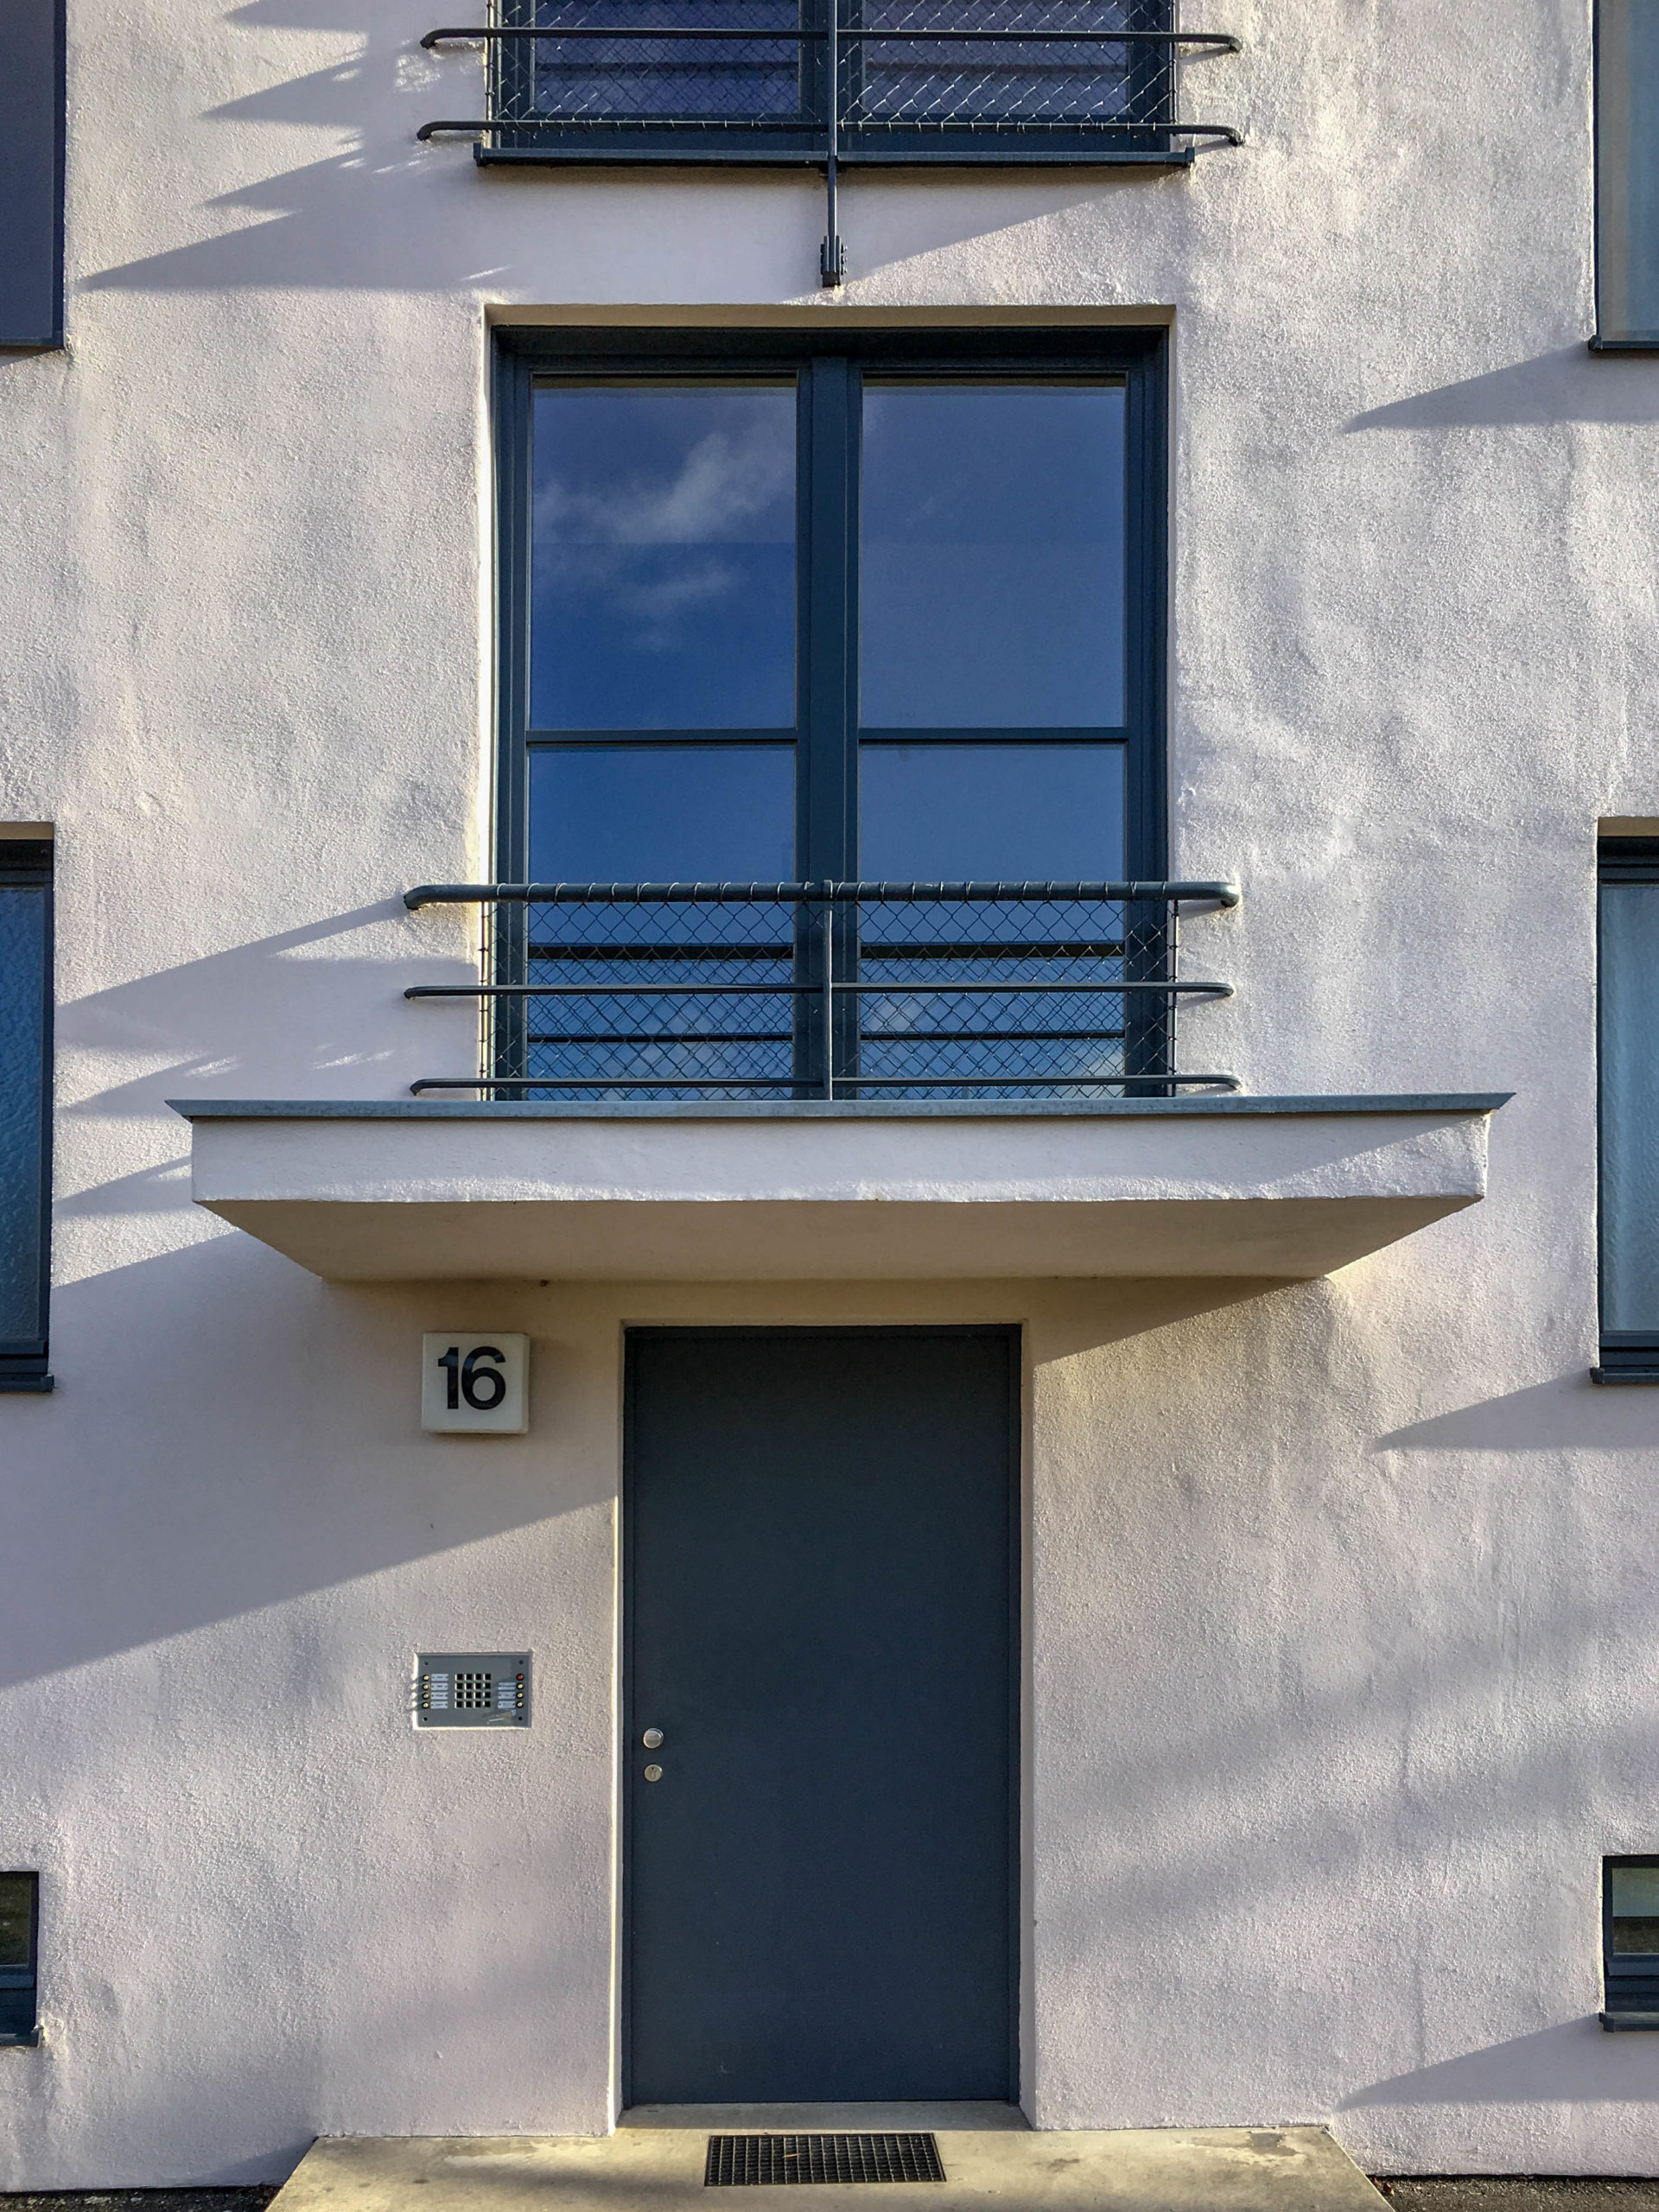 Residential complex, 1927. Architect: Ludwig Mies van der Rohe. Photo: Daniela Christmann